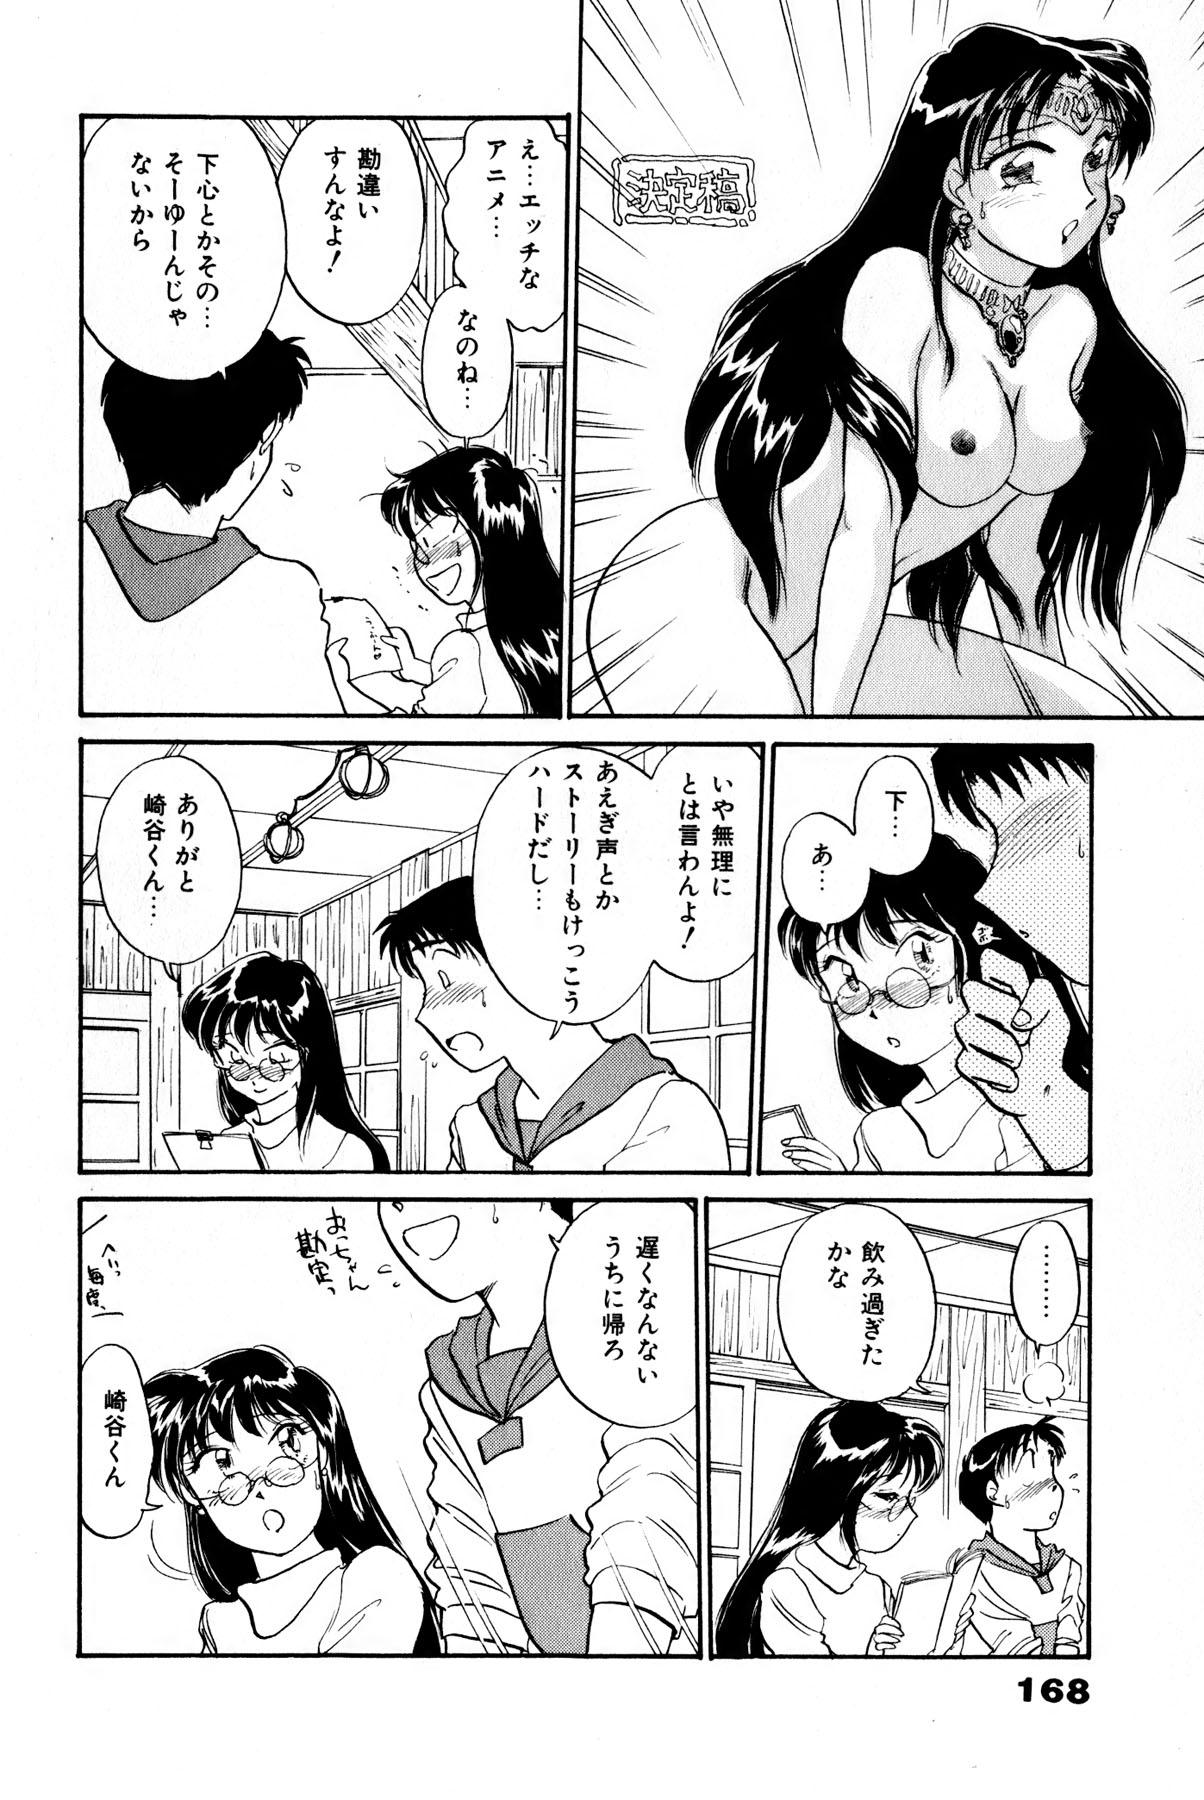 Otakara Comic 168